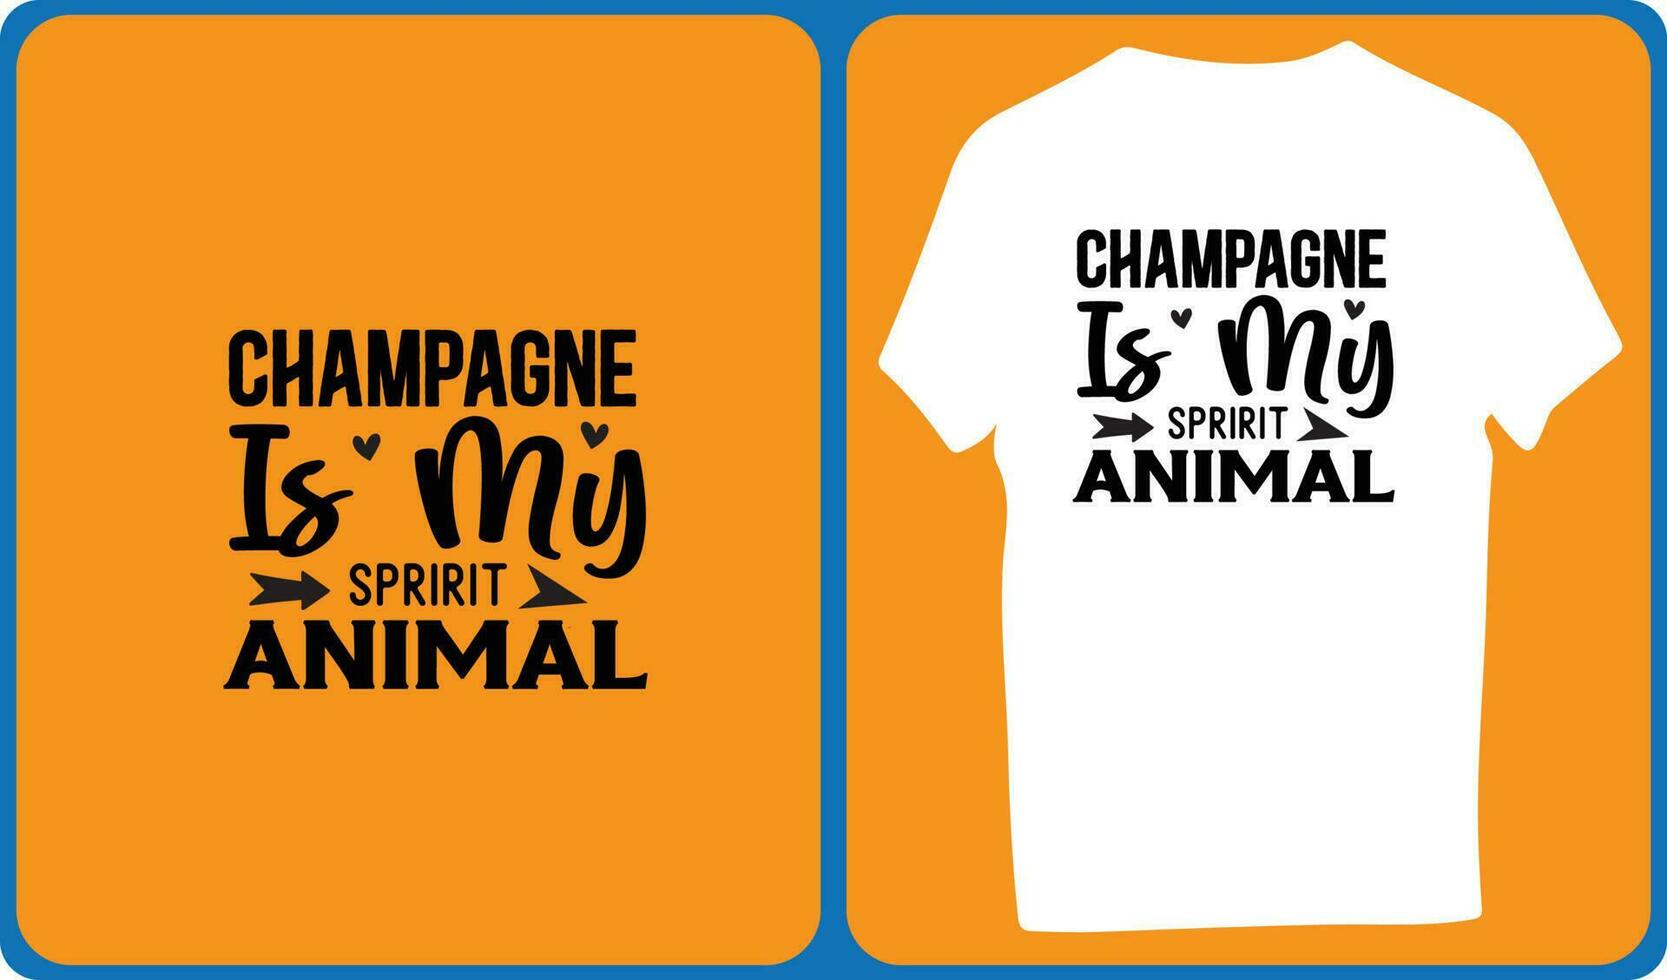 Champagne Is My Spririt Animal vector